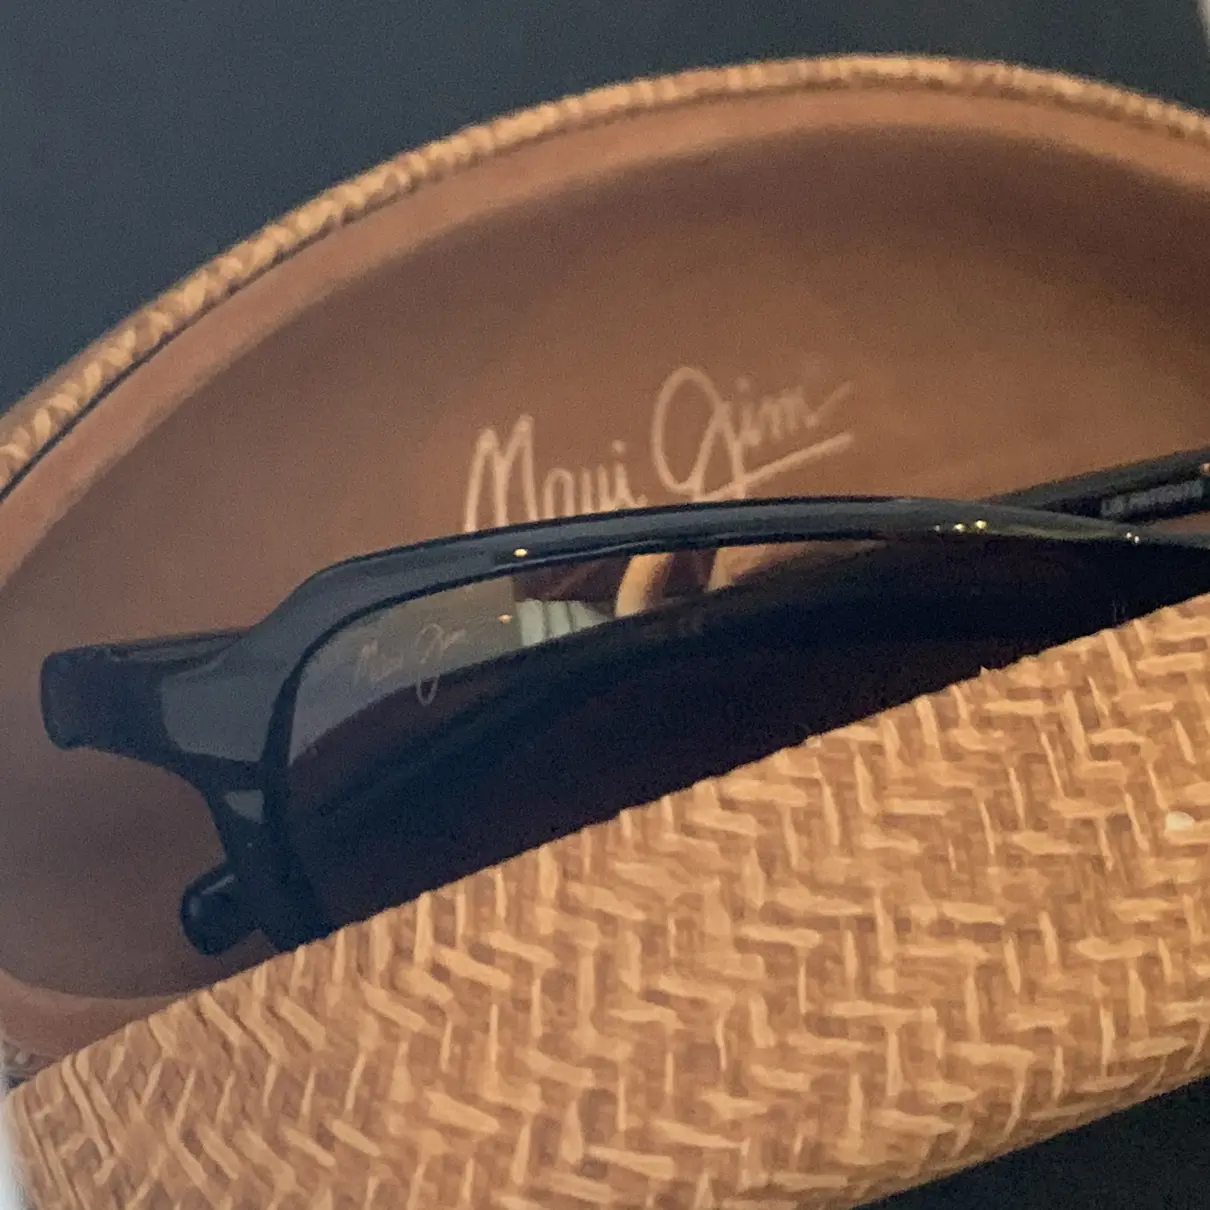 Luxury Maui Jim Sunglasses Men